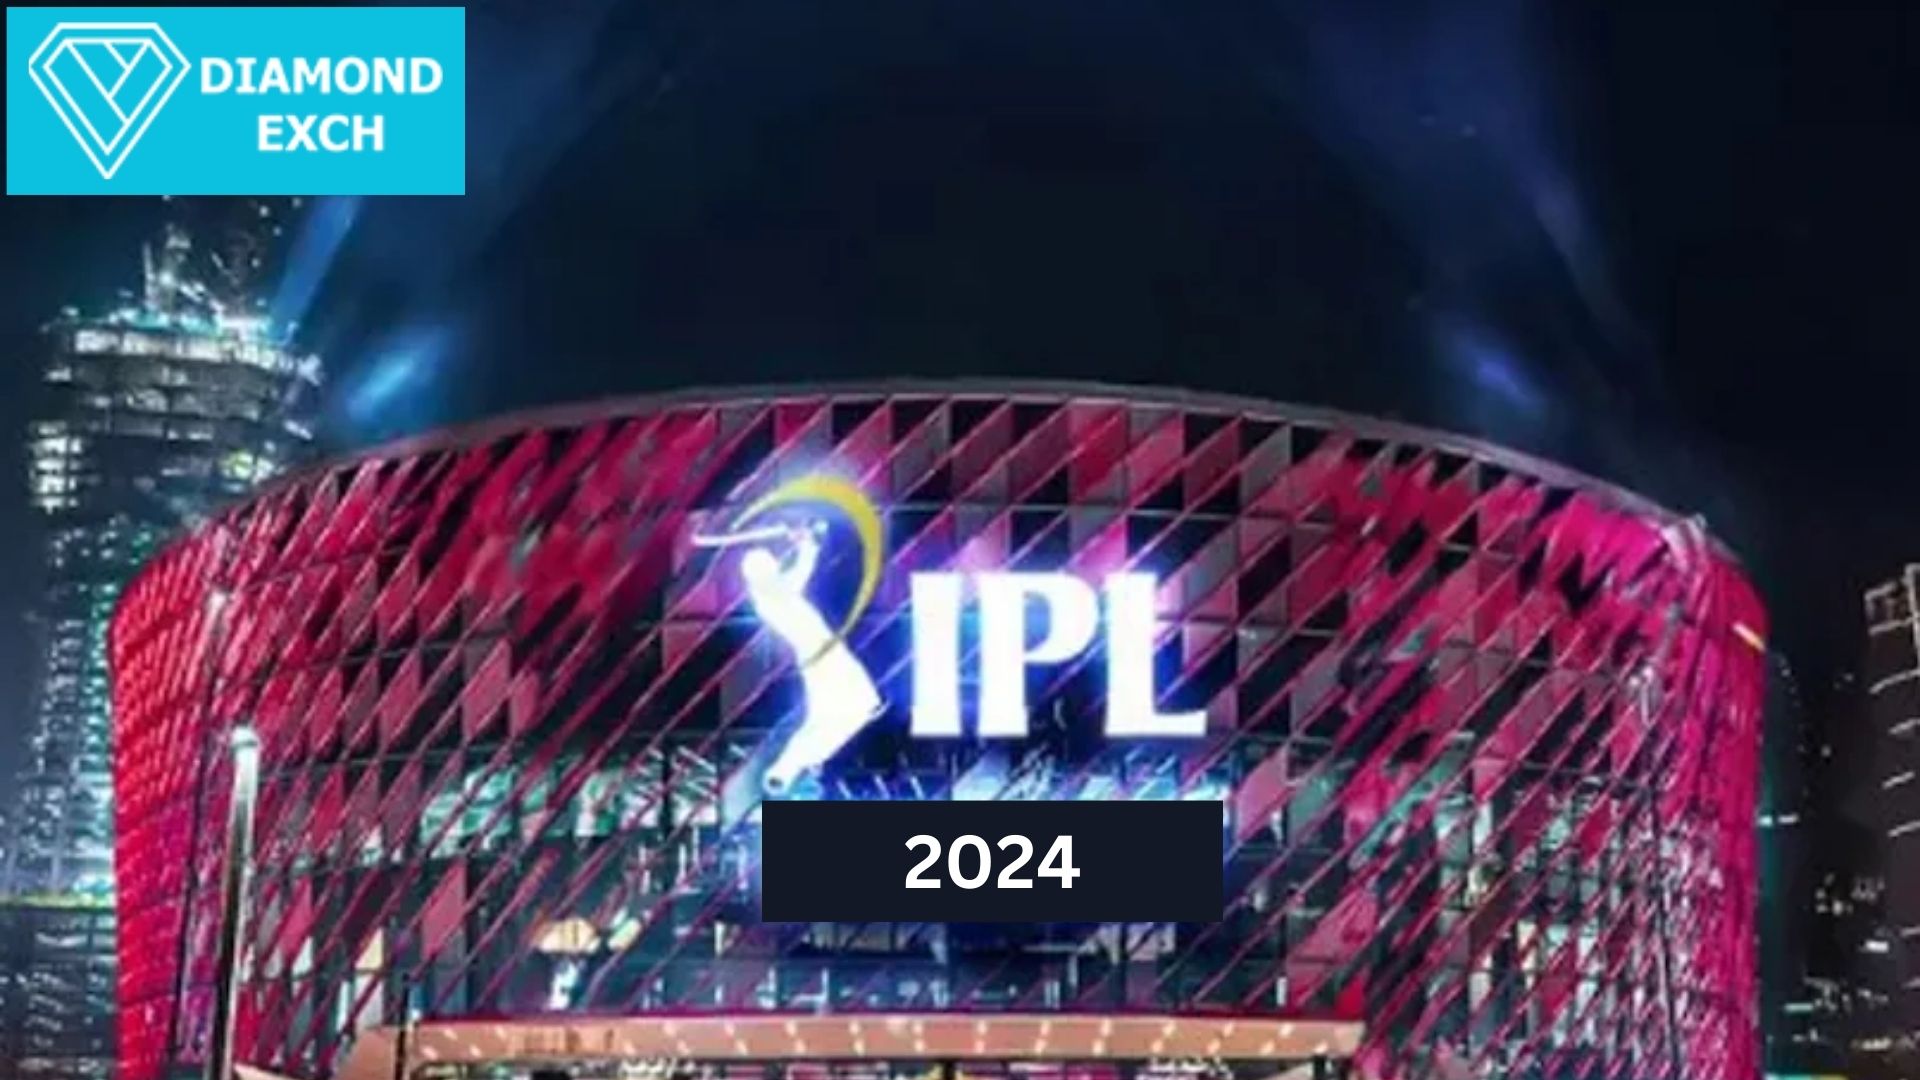 Diamond Exch | The Biggest Platform for IPL 2024 Cricket Betting